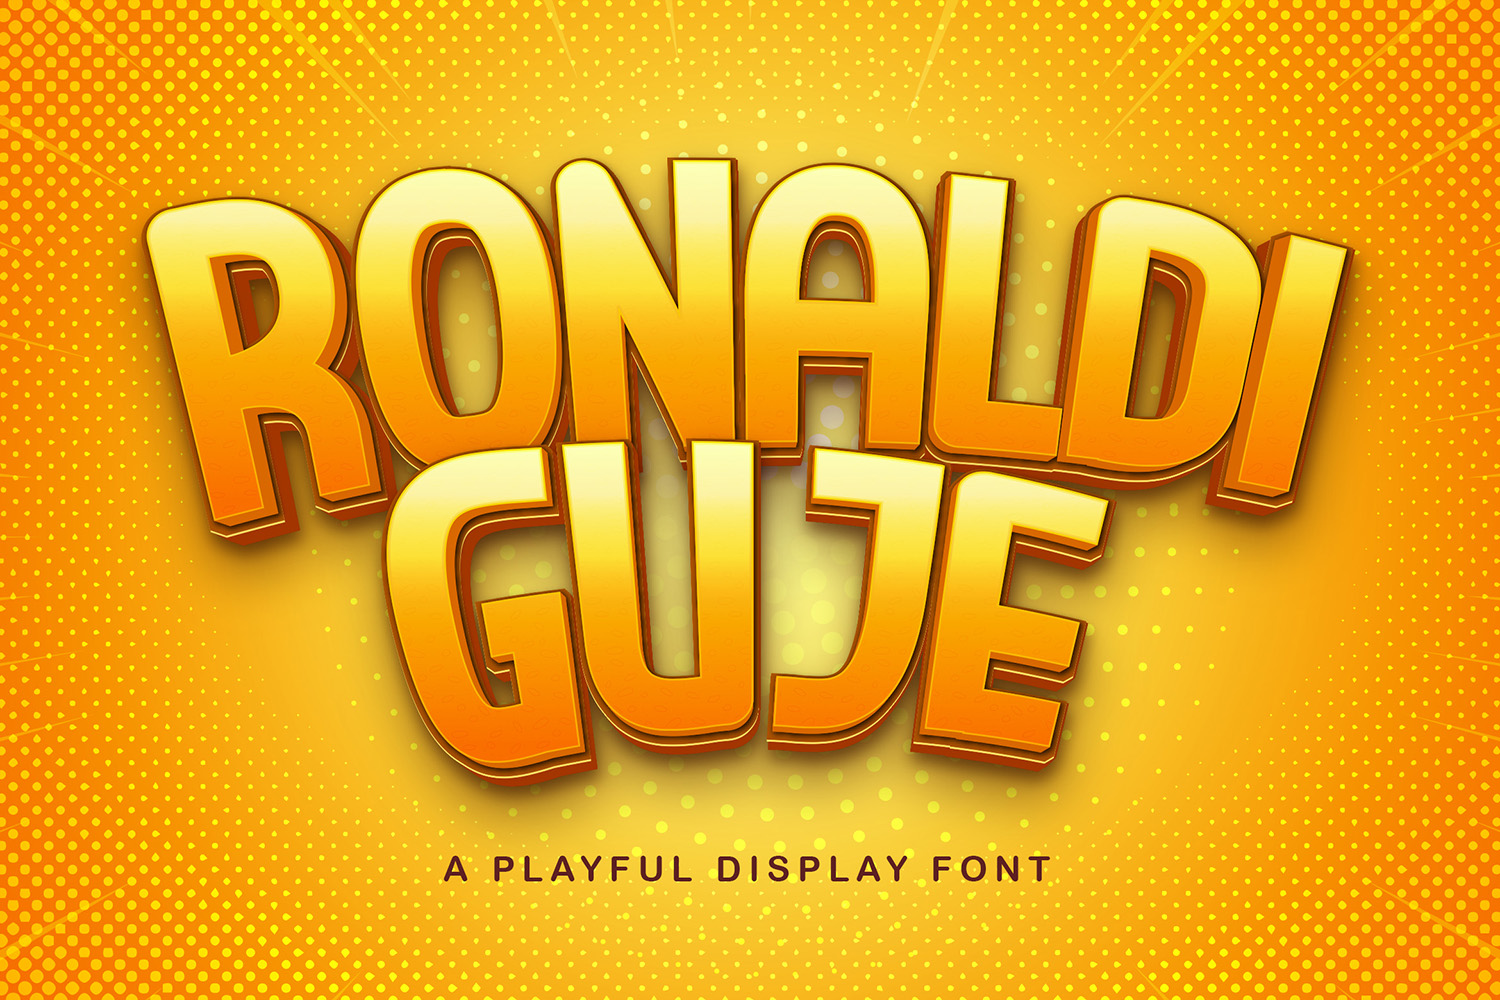 Ronaldi Guje Free Font